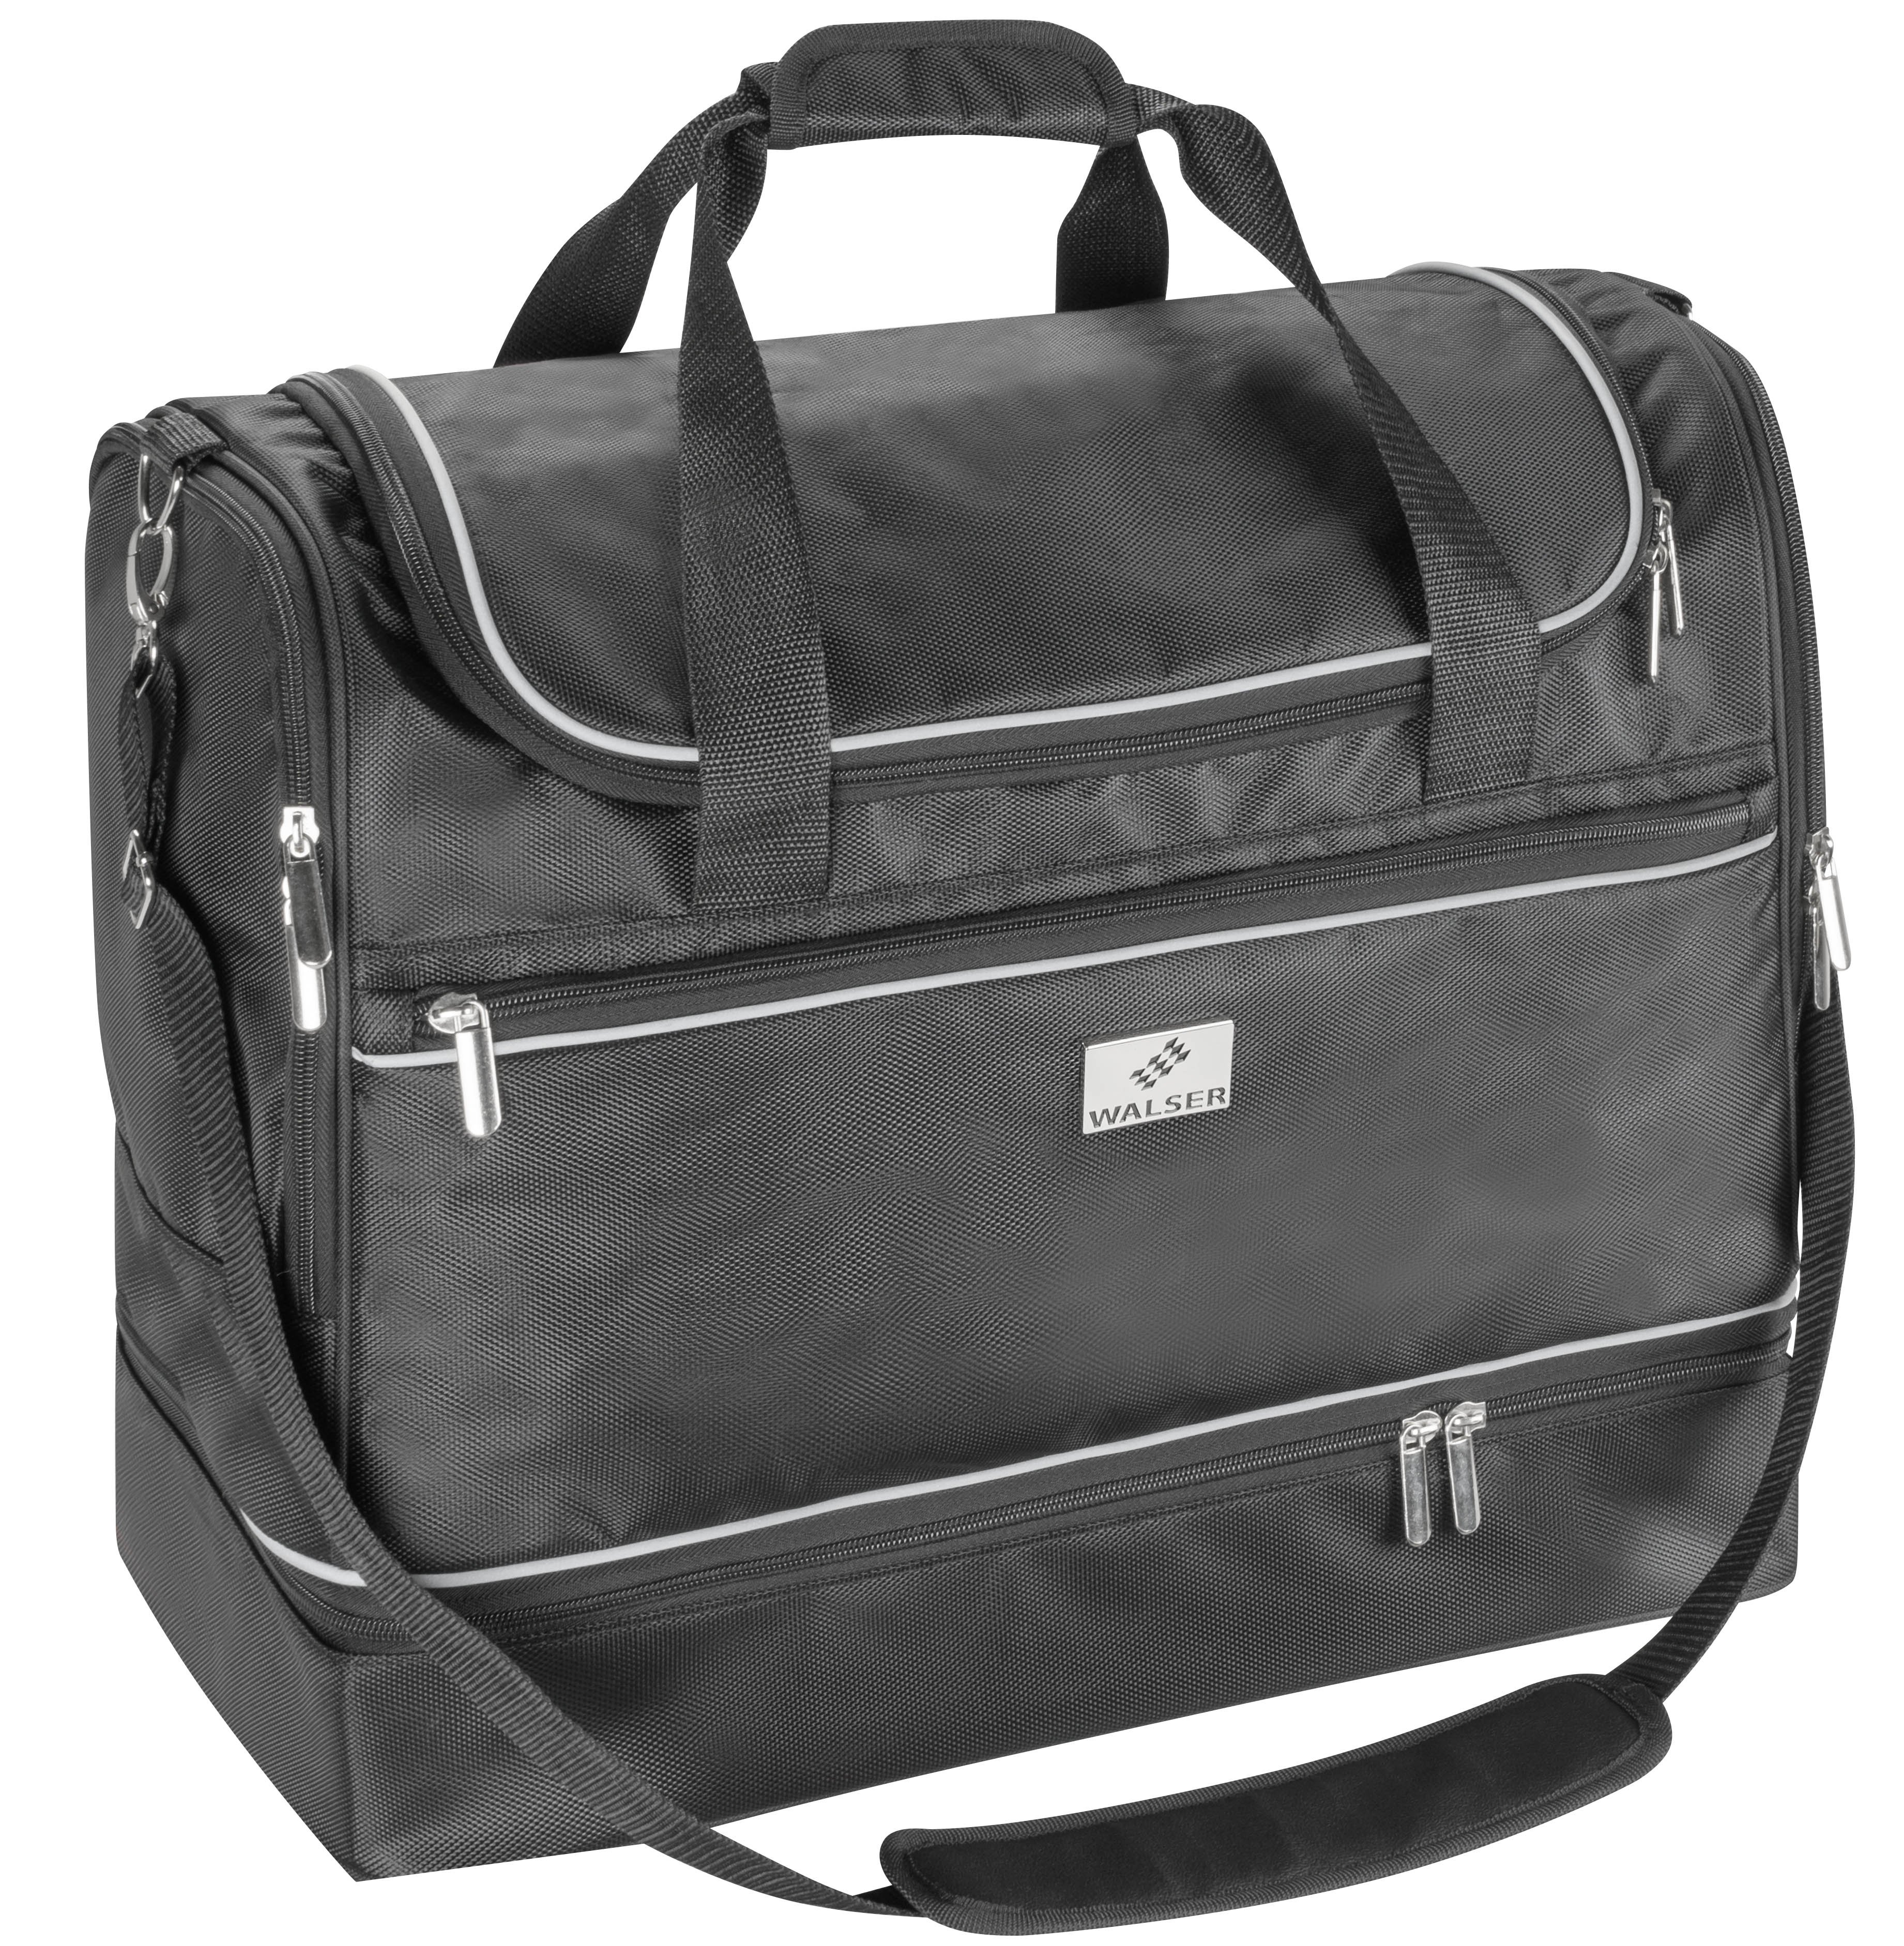 Carbags sports bag 65L - 45x30x45cm